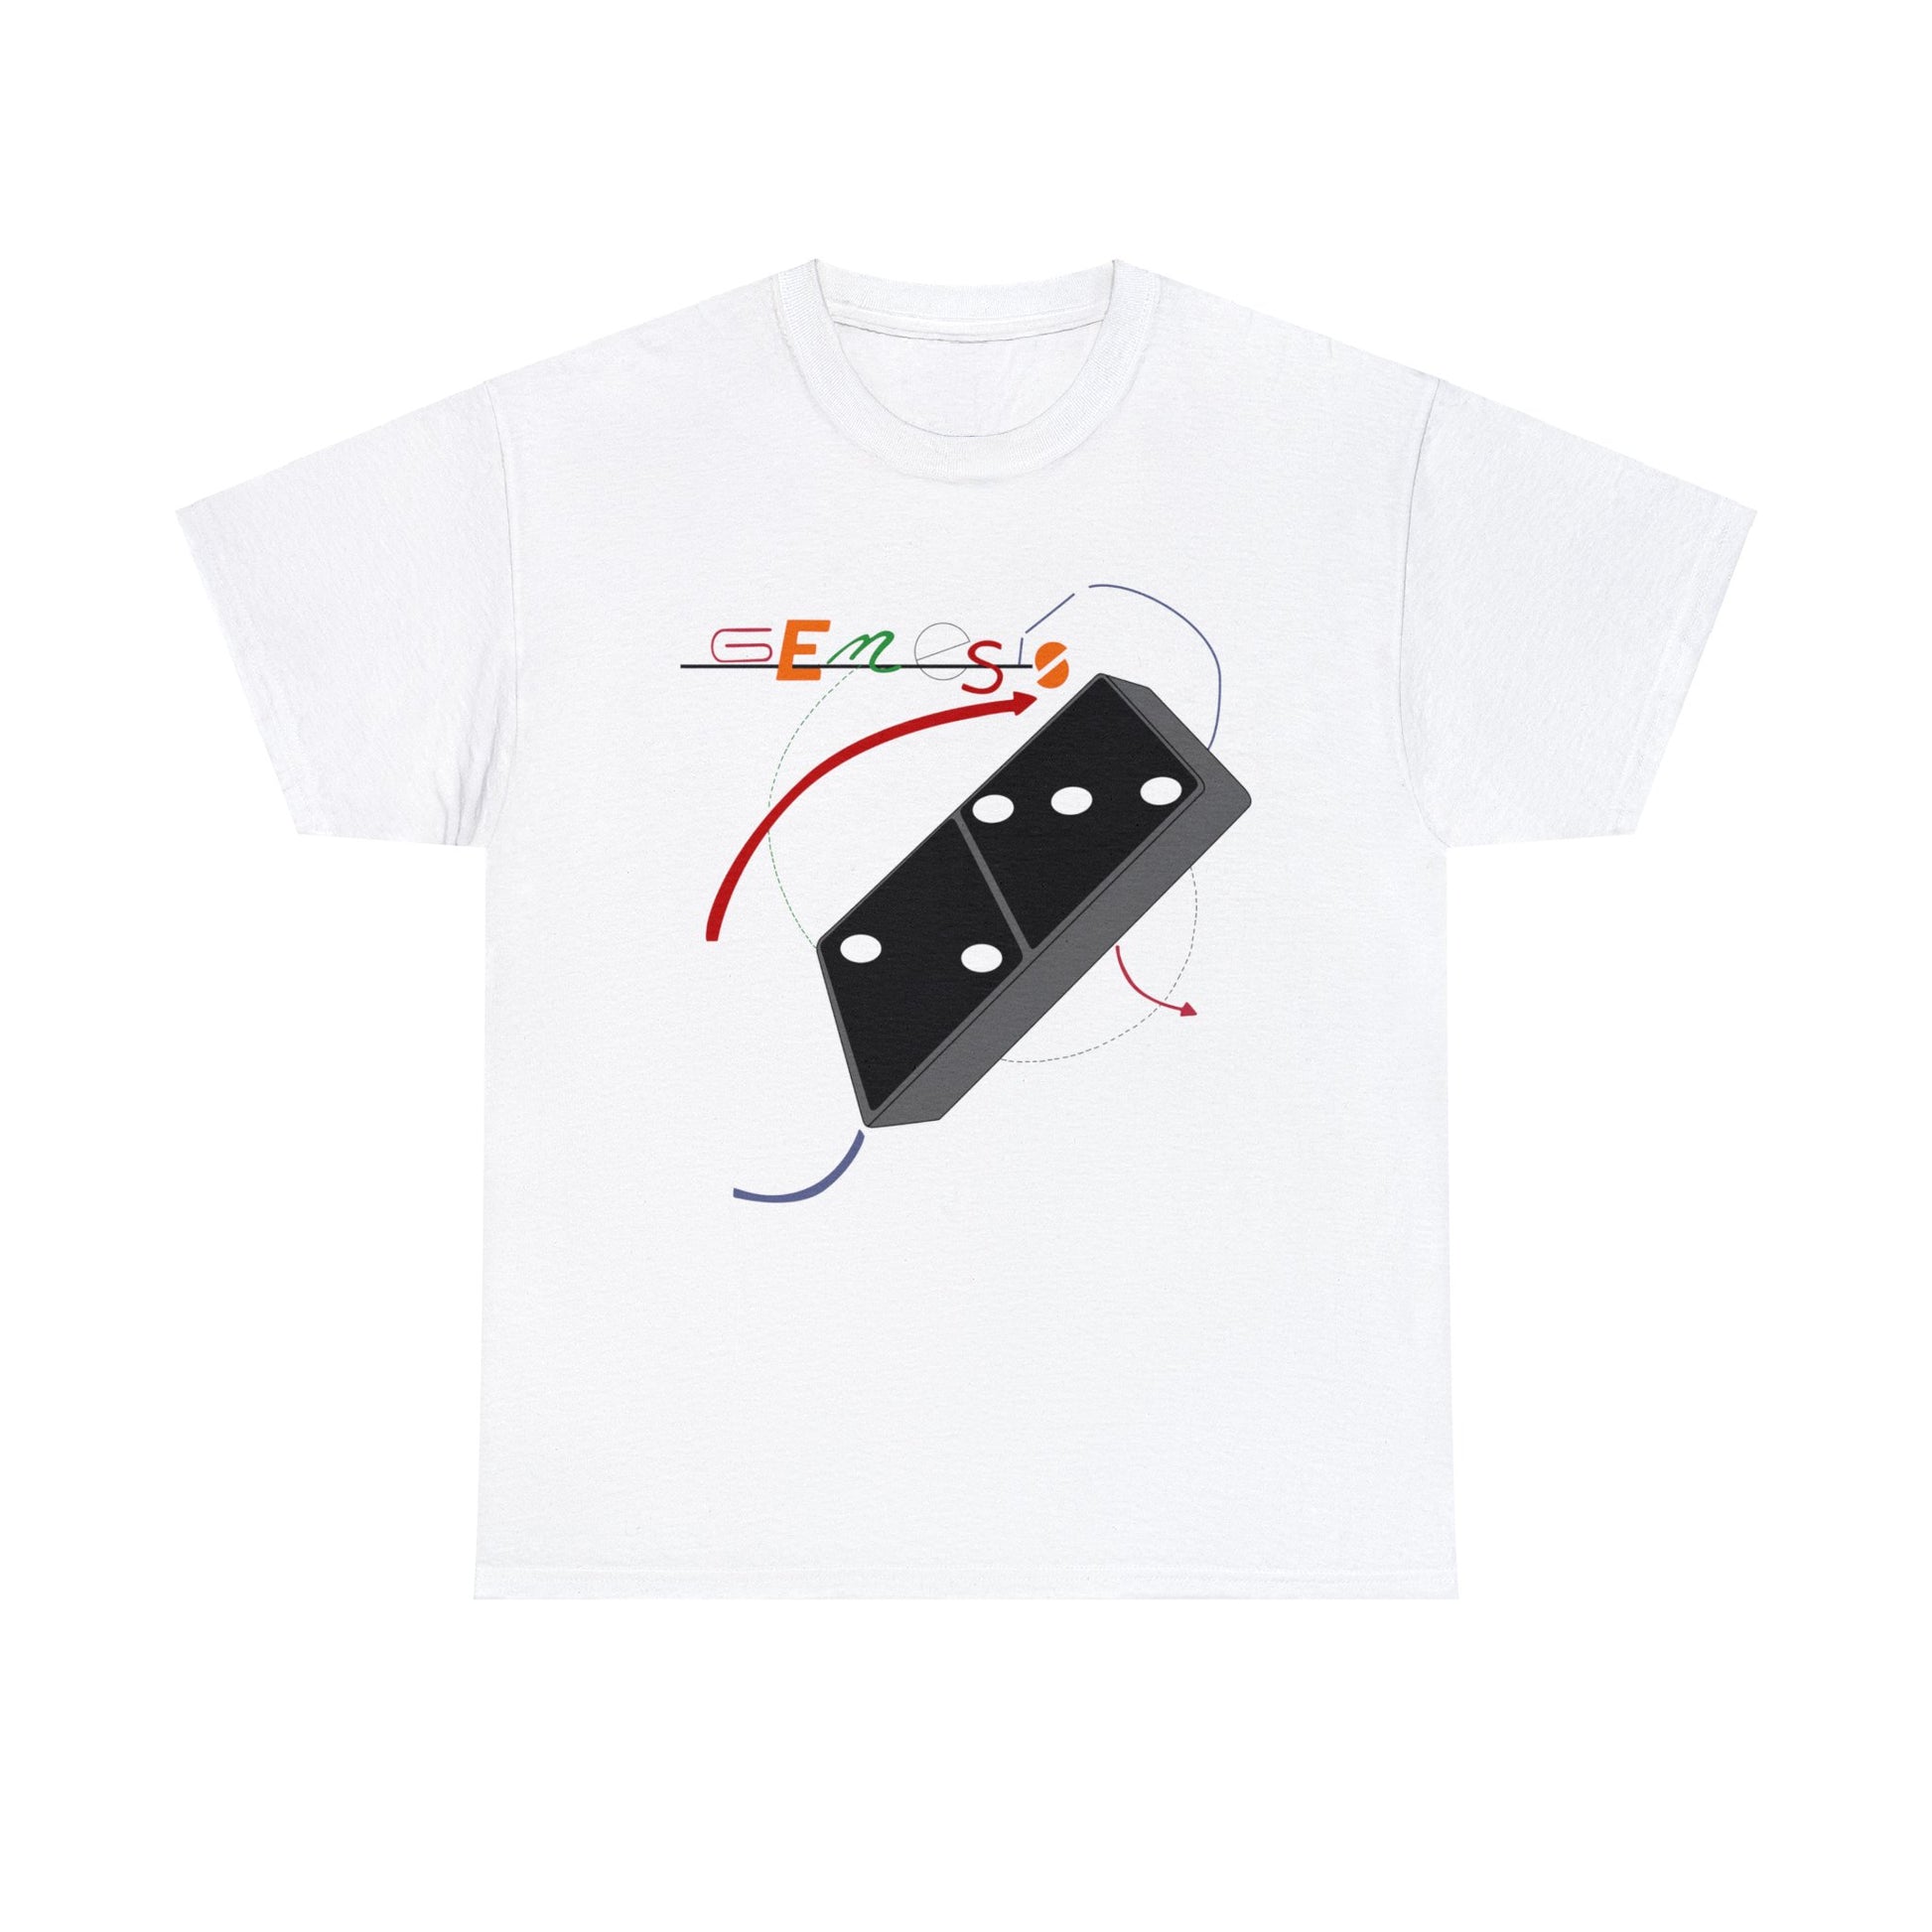 Genesis Invisible Touch Australian Tour 1986 T-shirt for Sale